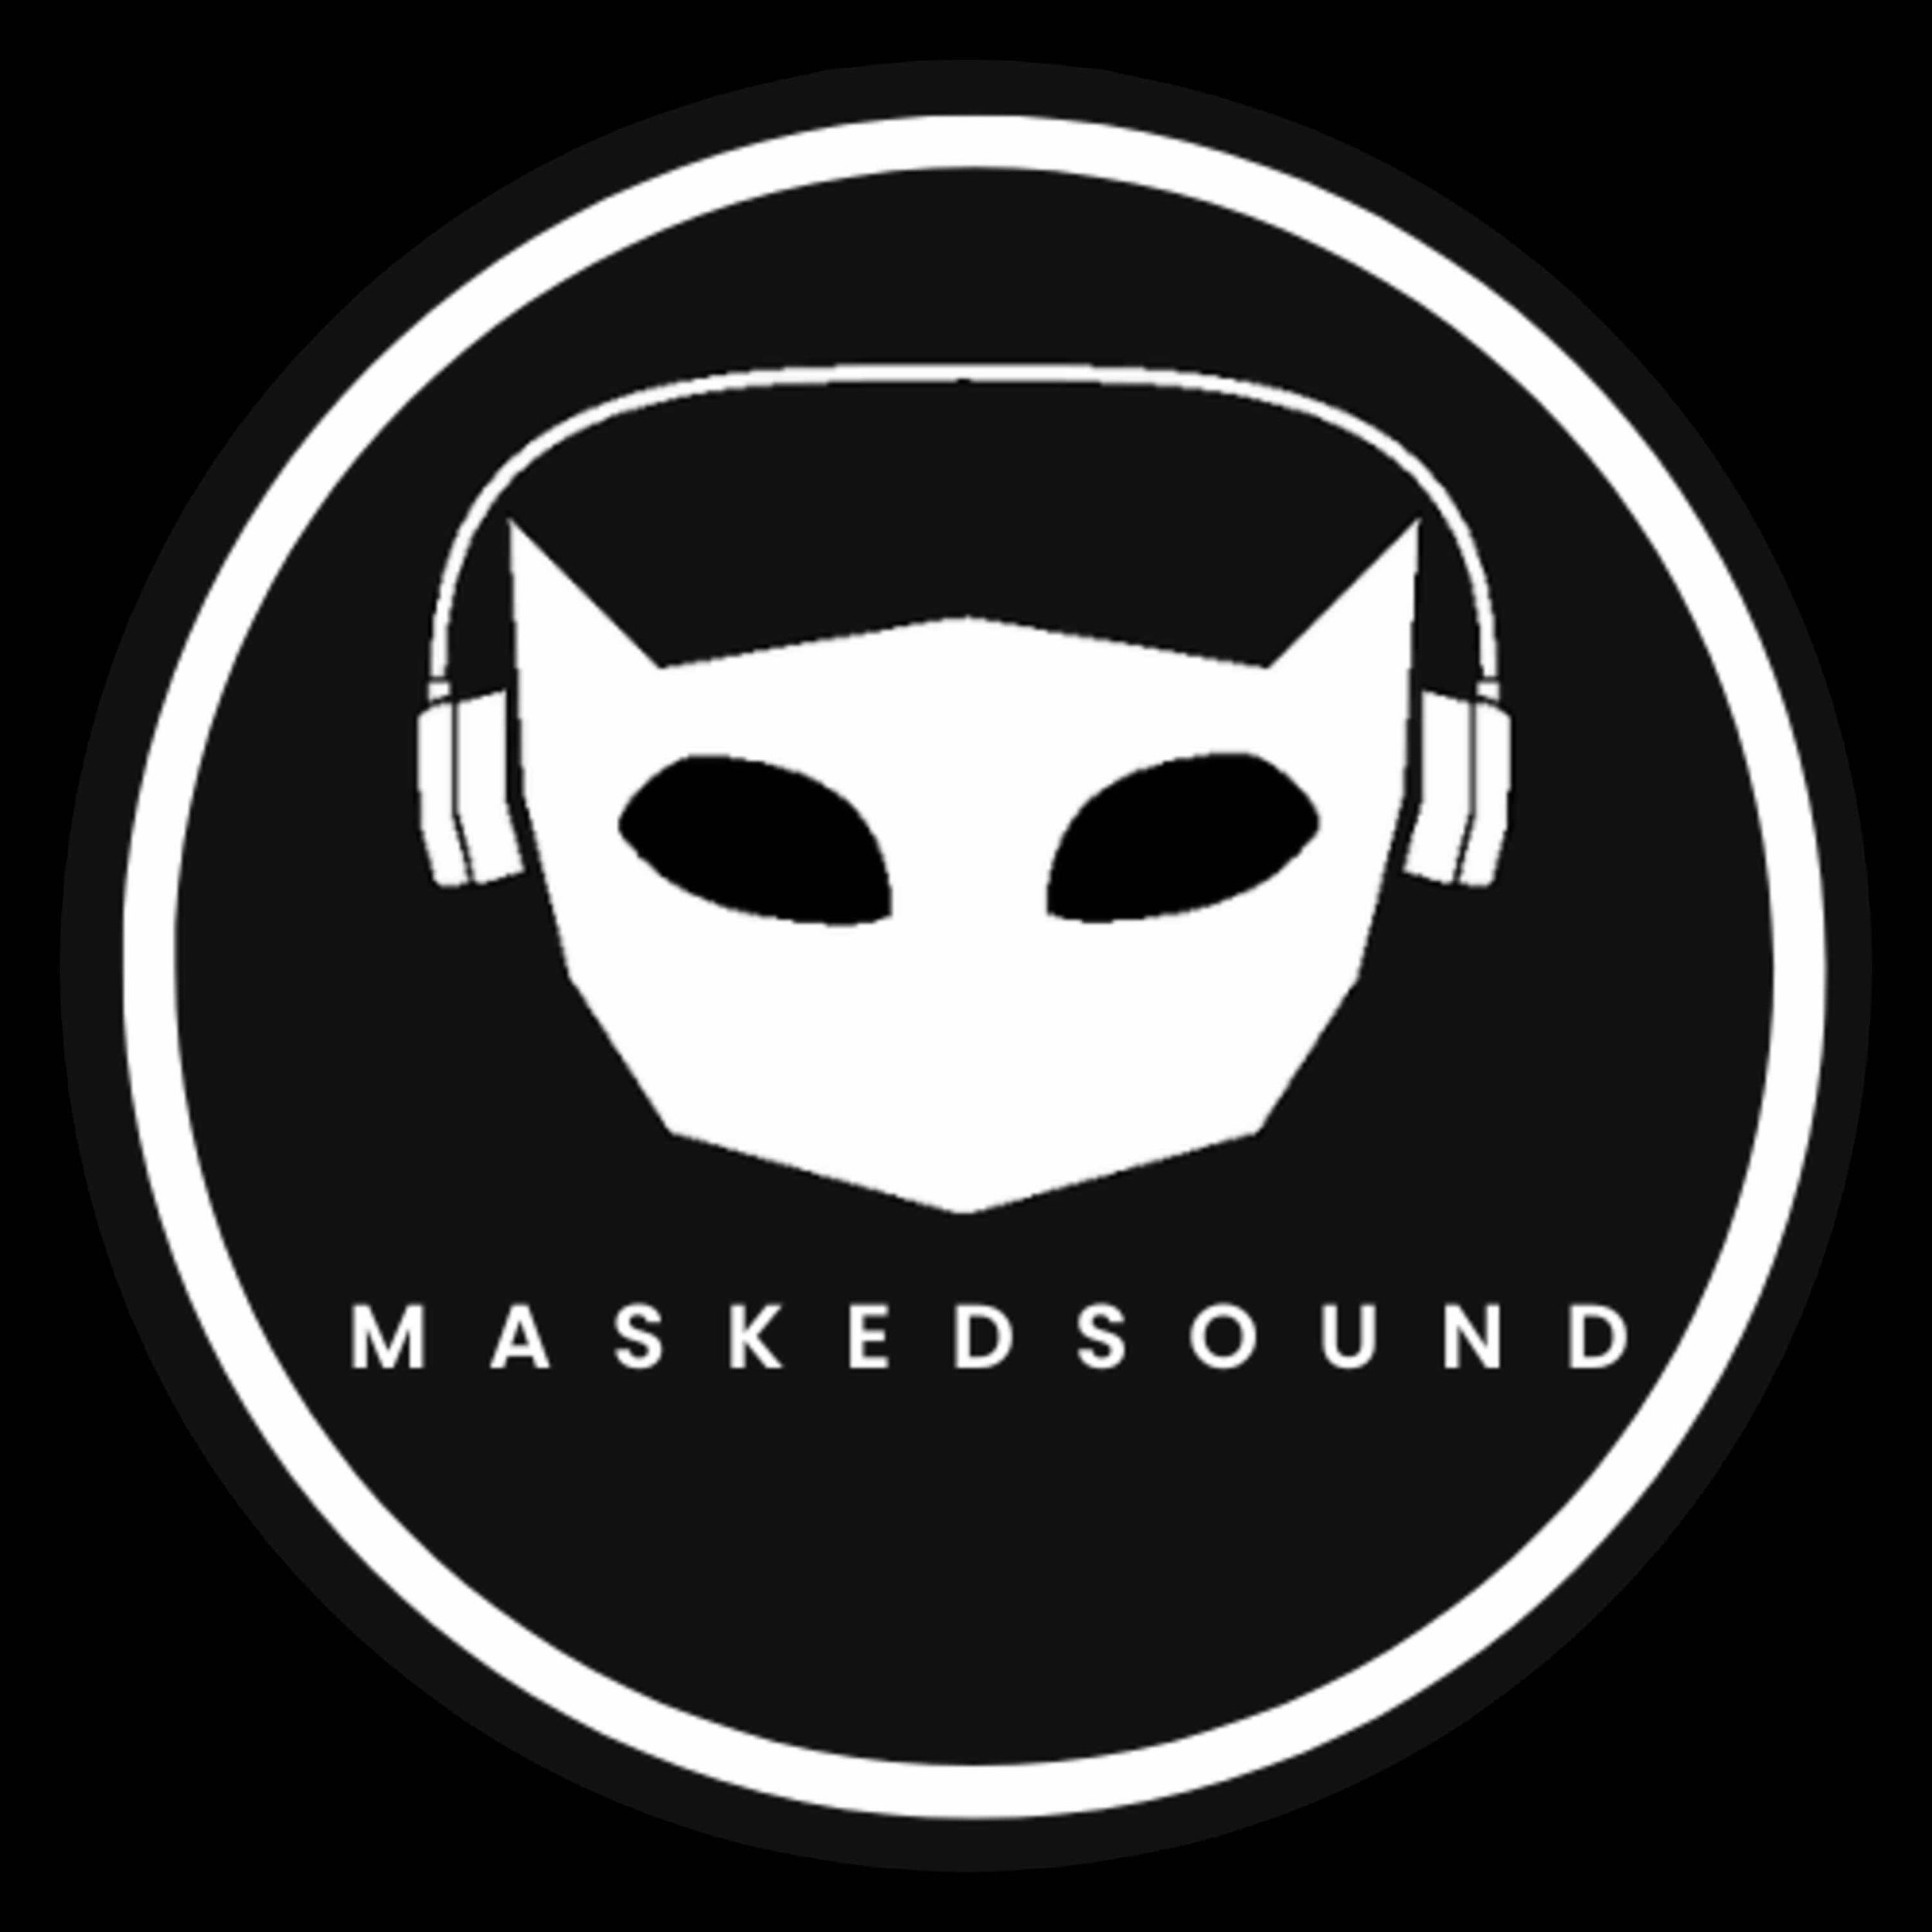 Maskedsound